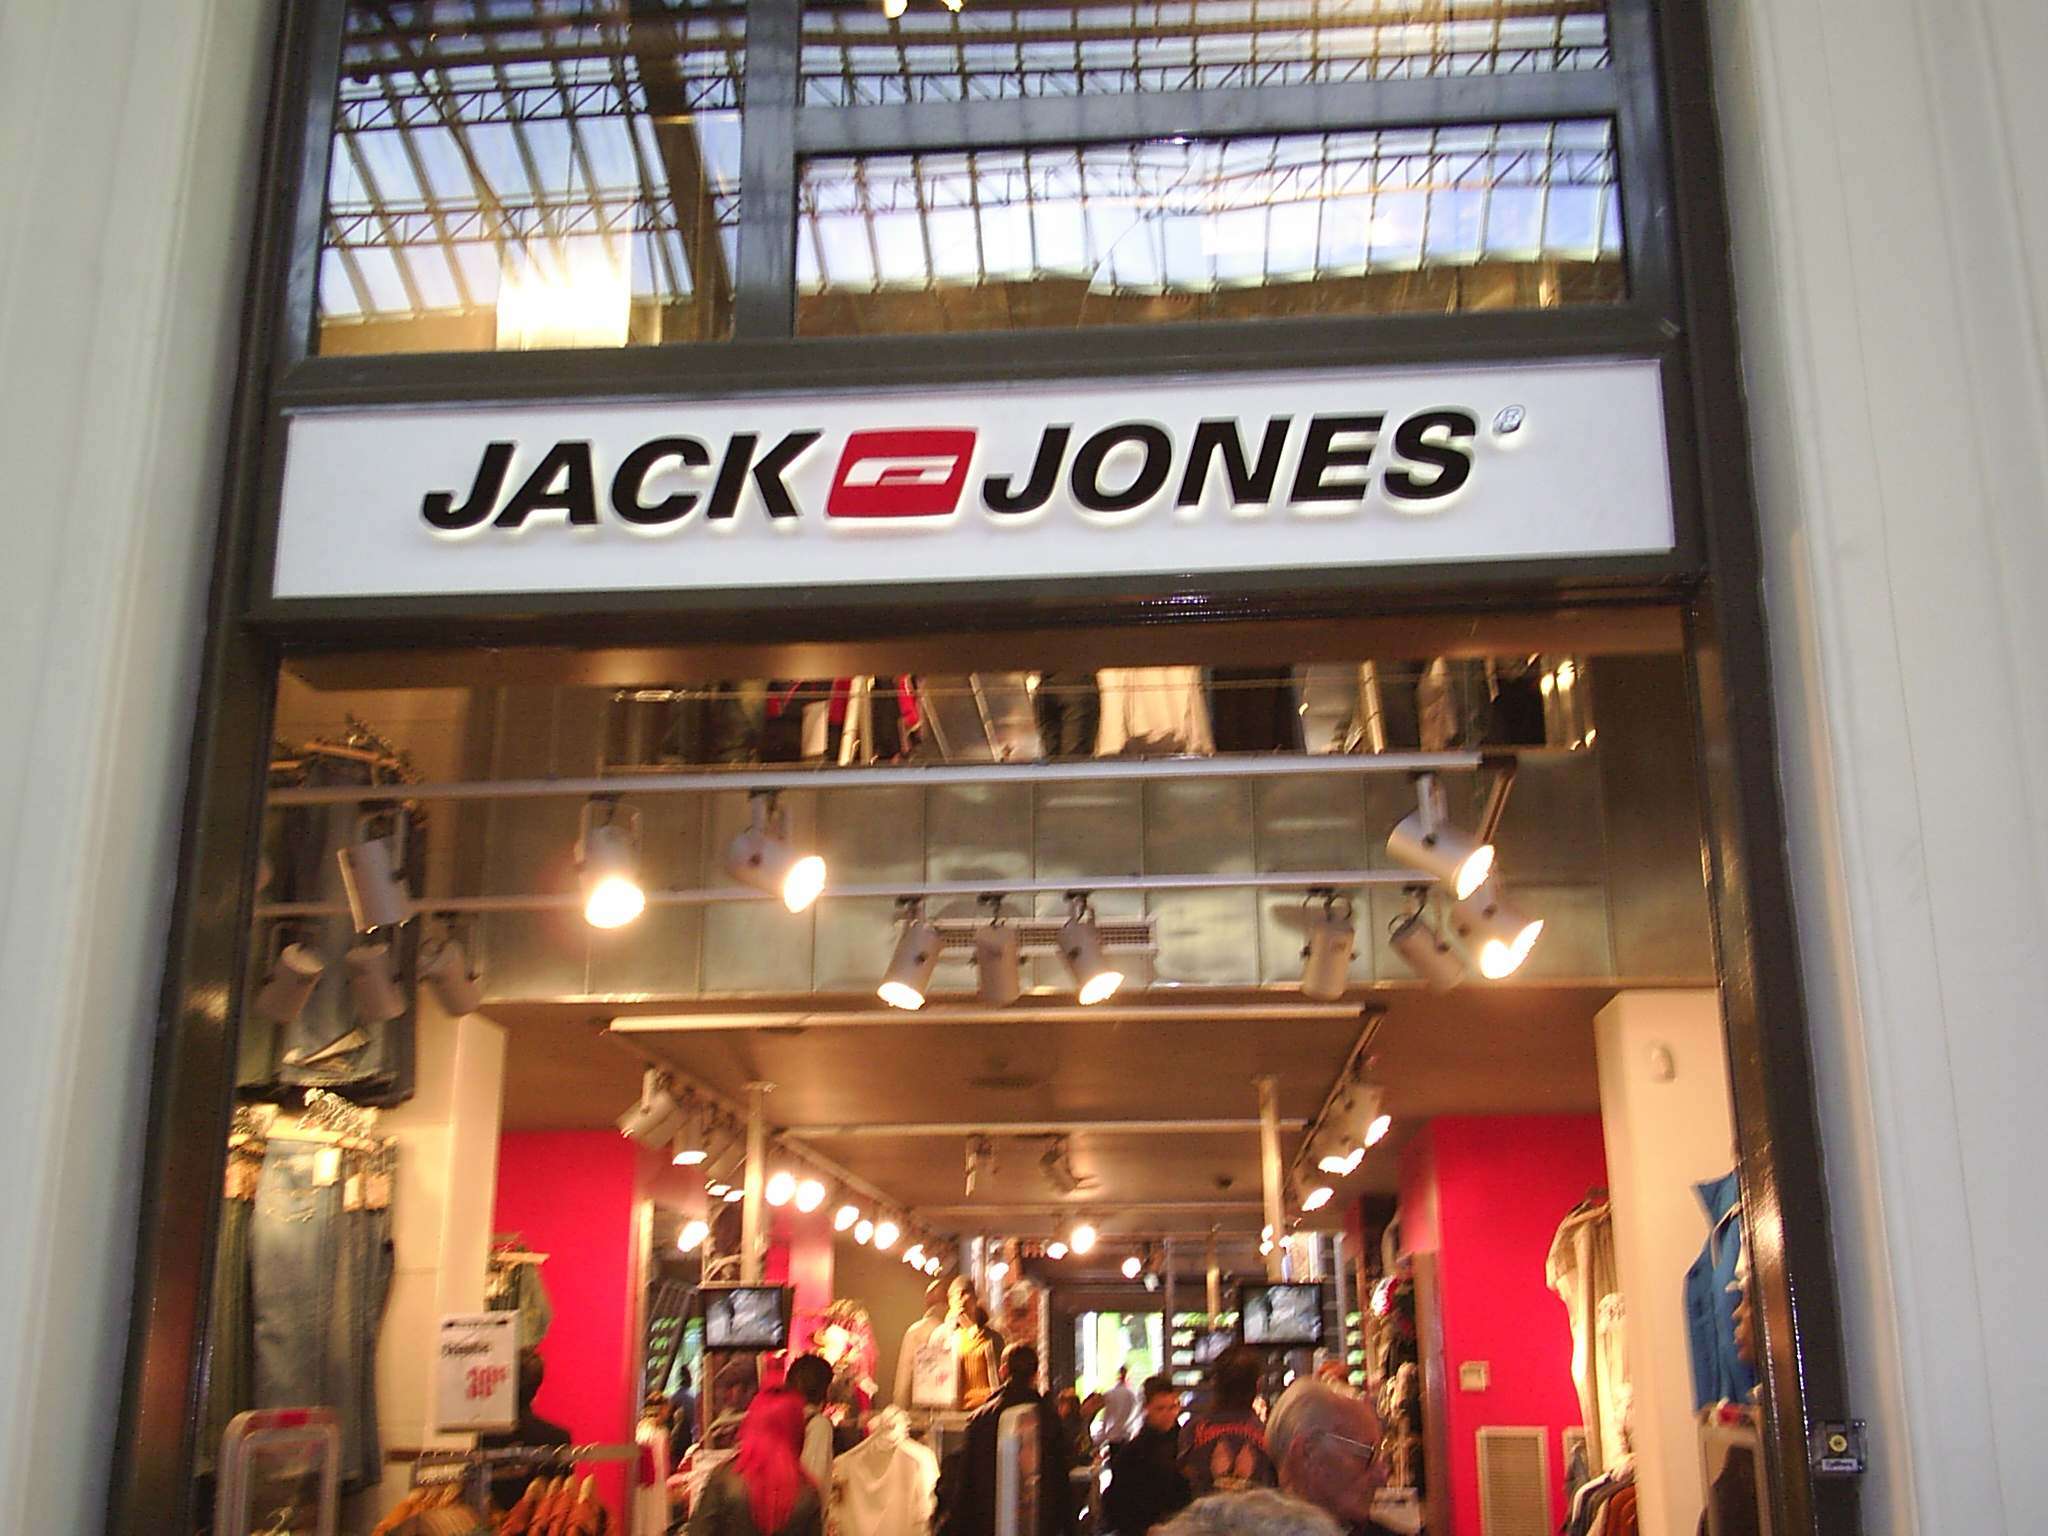 FOTO 1 Tienda Jack- Jones Madrid y Mallorca 2005